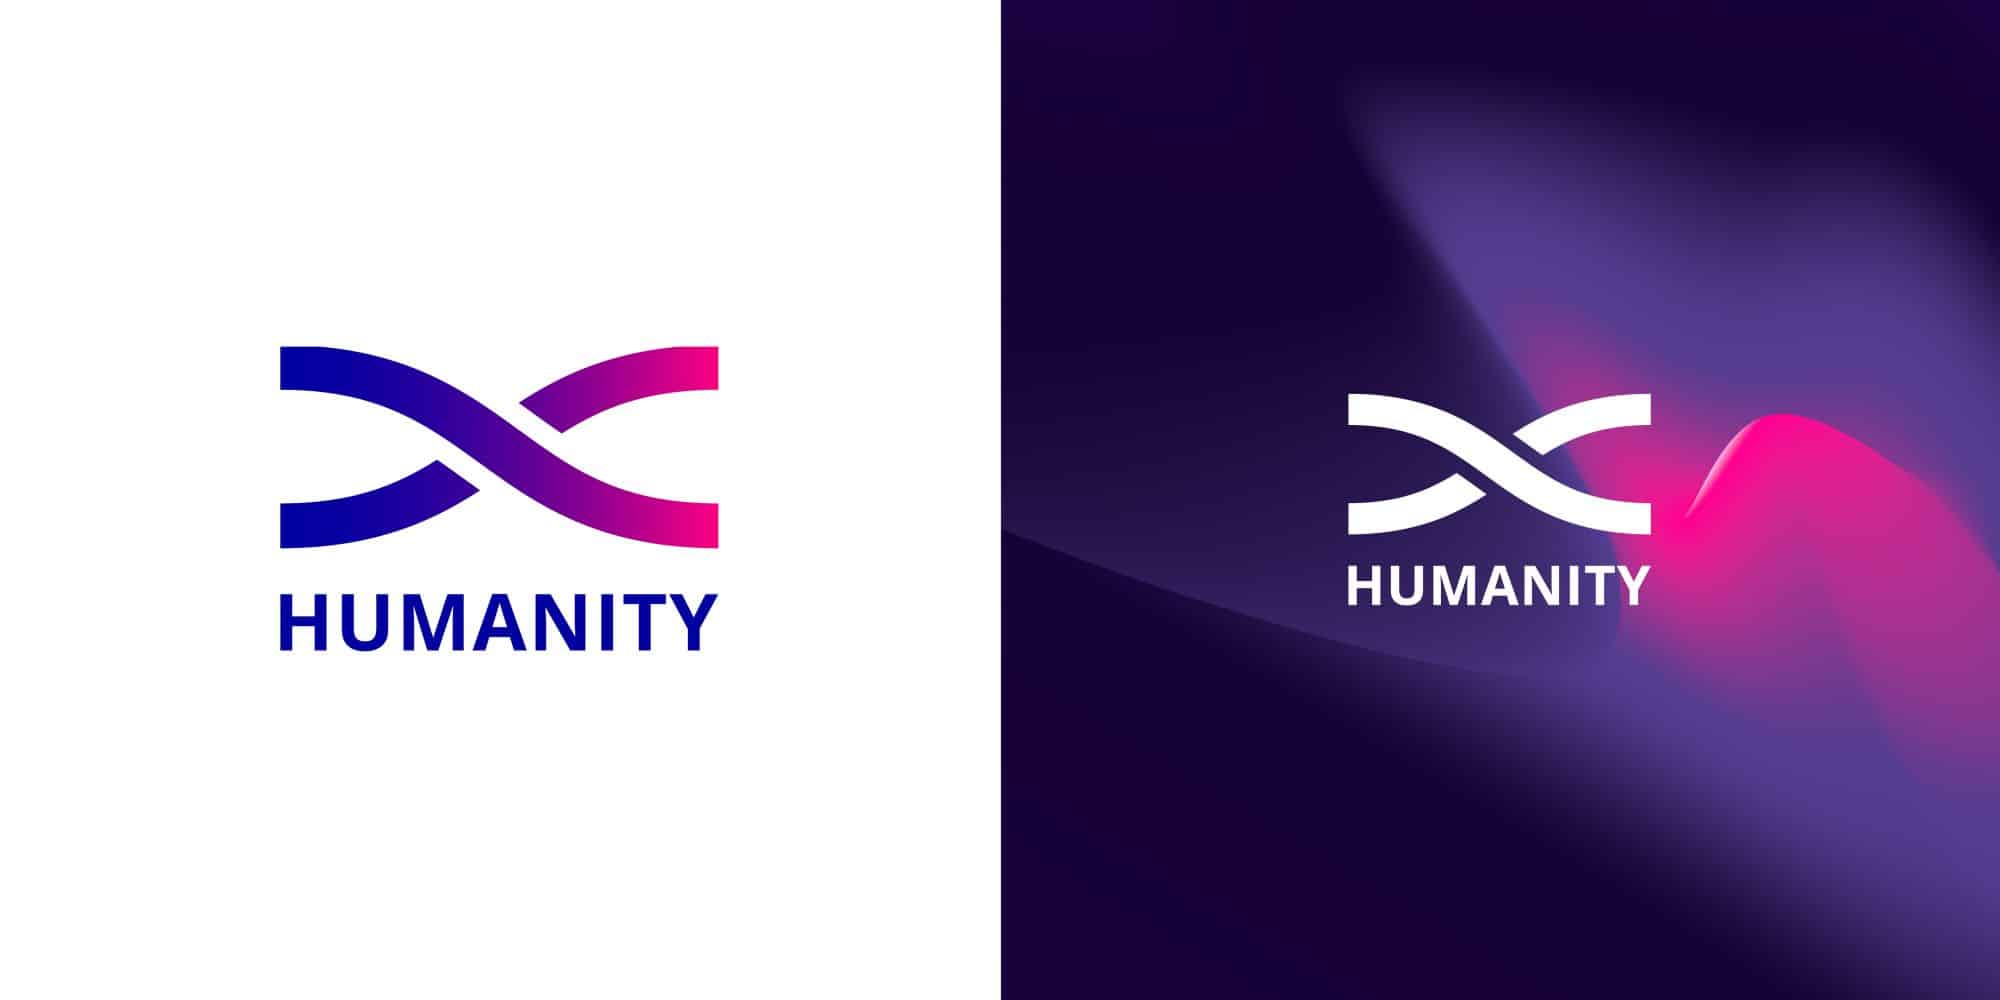 xHumanity identitate vizuala si website pentru o platforma digitala